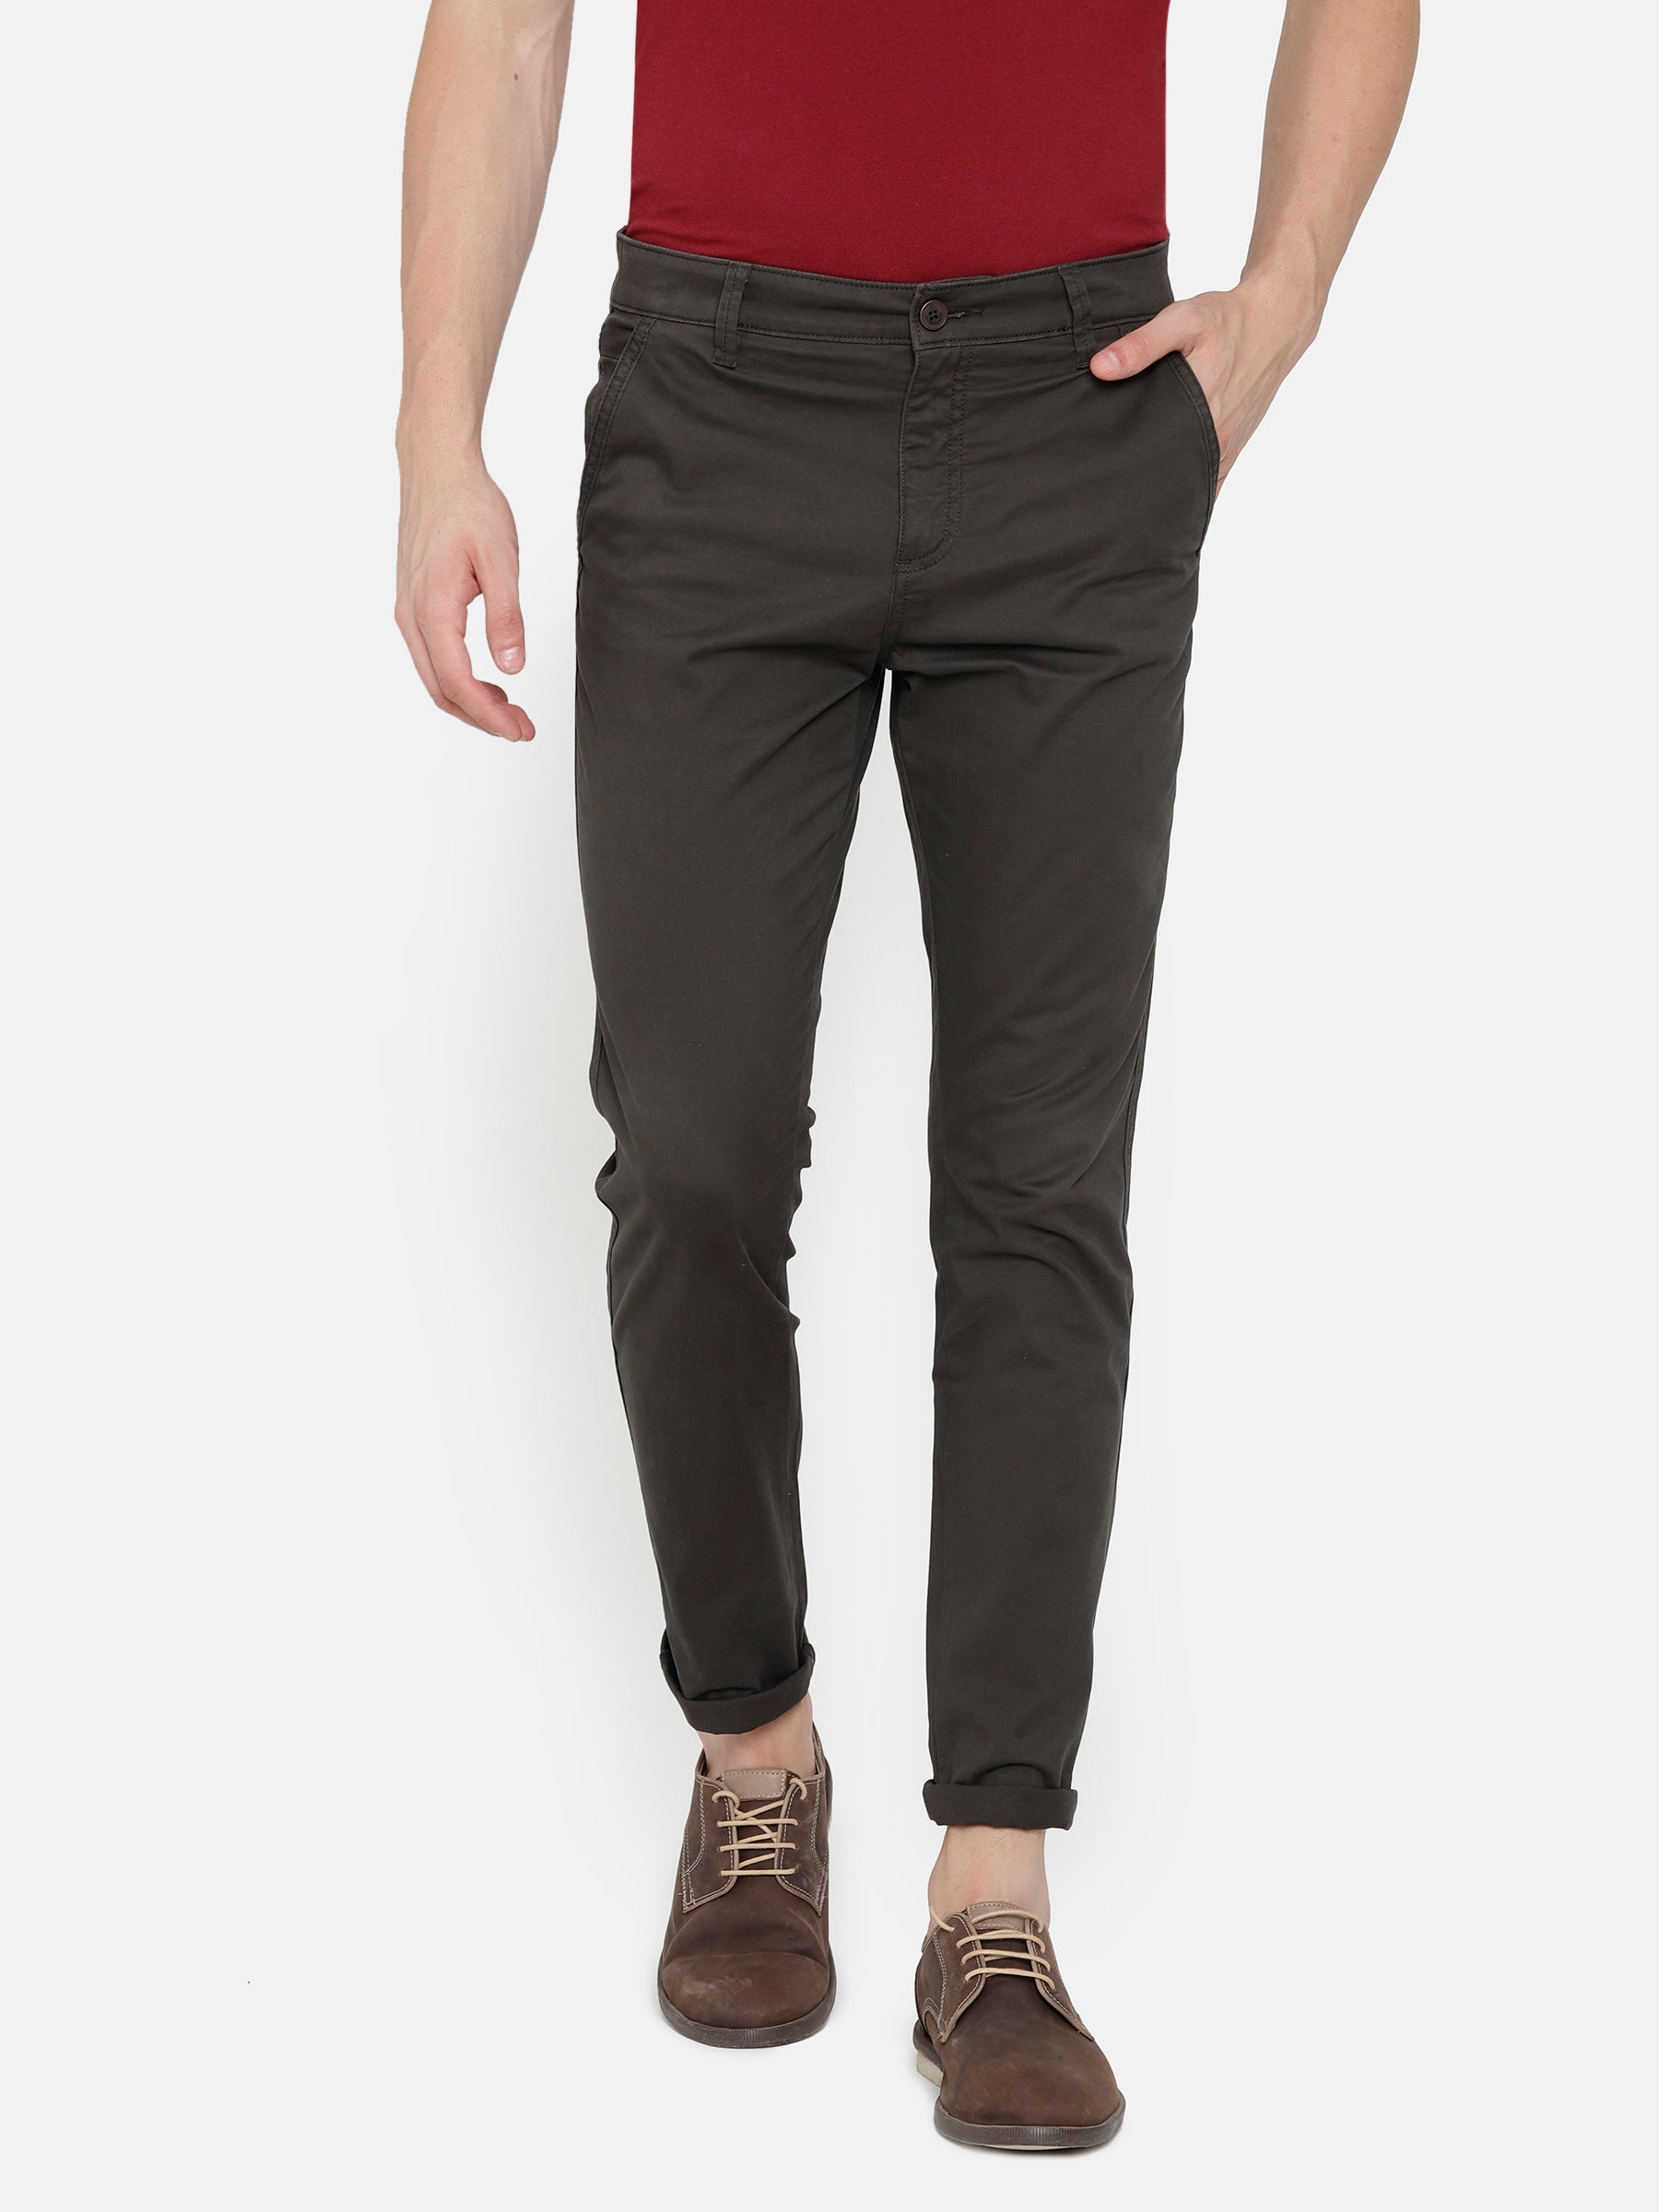 Solid Color Cotton Pant in Dark Grey  BMX63